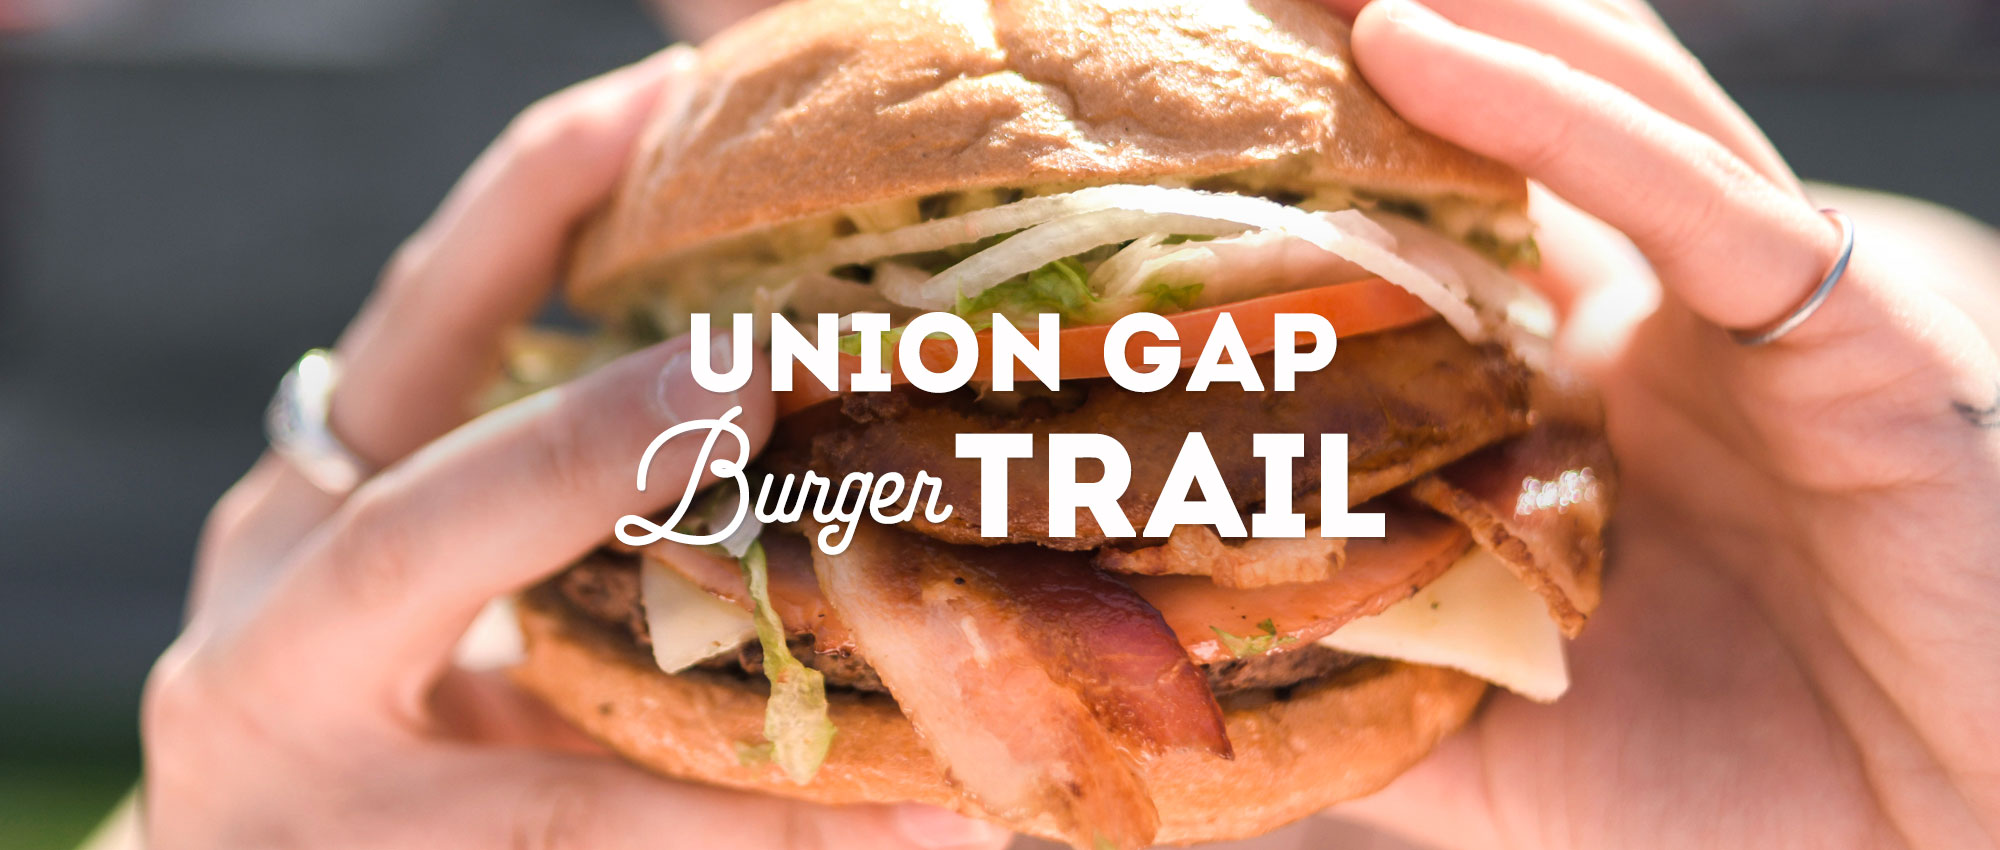 All-American Burger Trail in Union Gap, WA